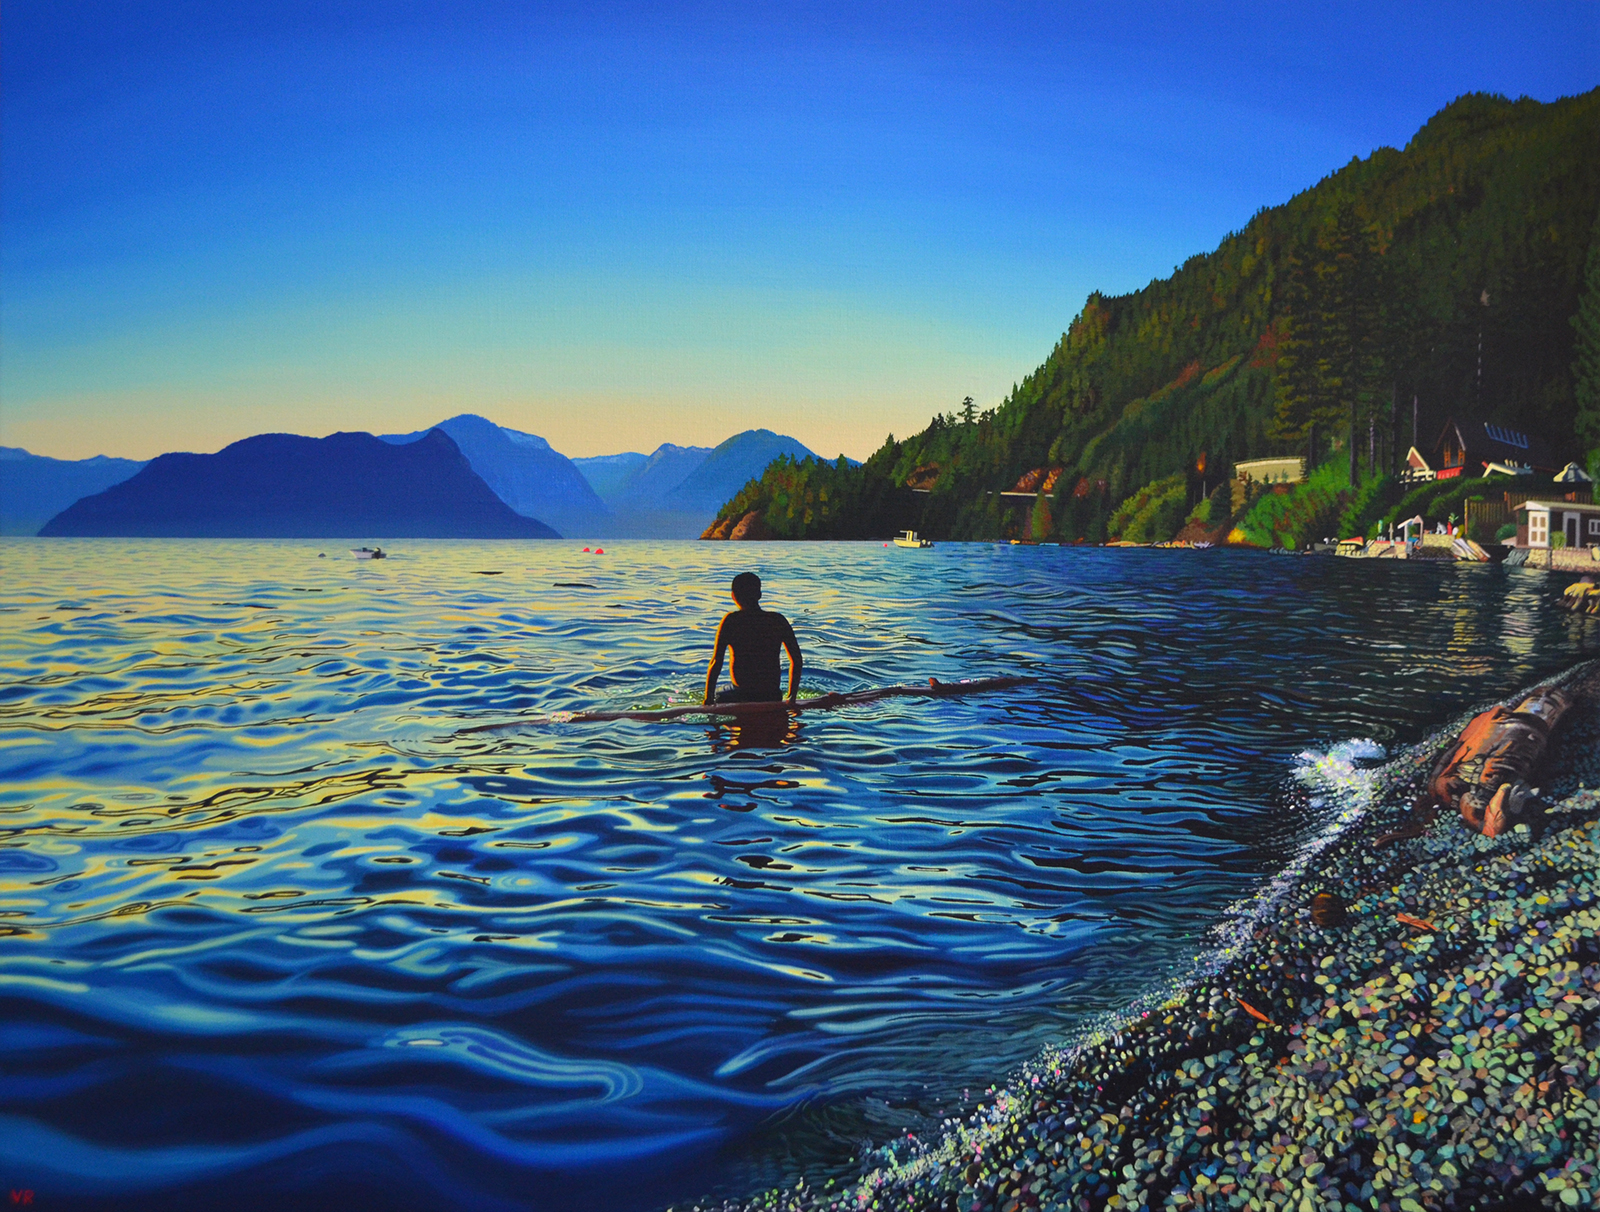   Save Howe Sound    37 x 49    acrylic on canvas  